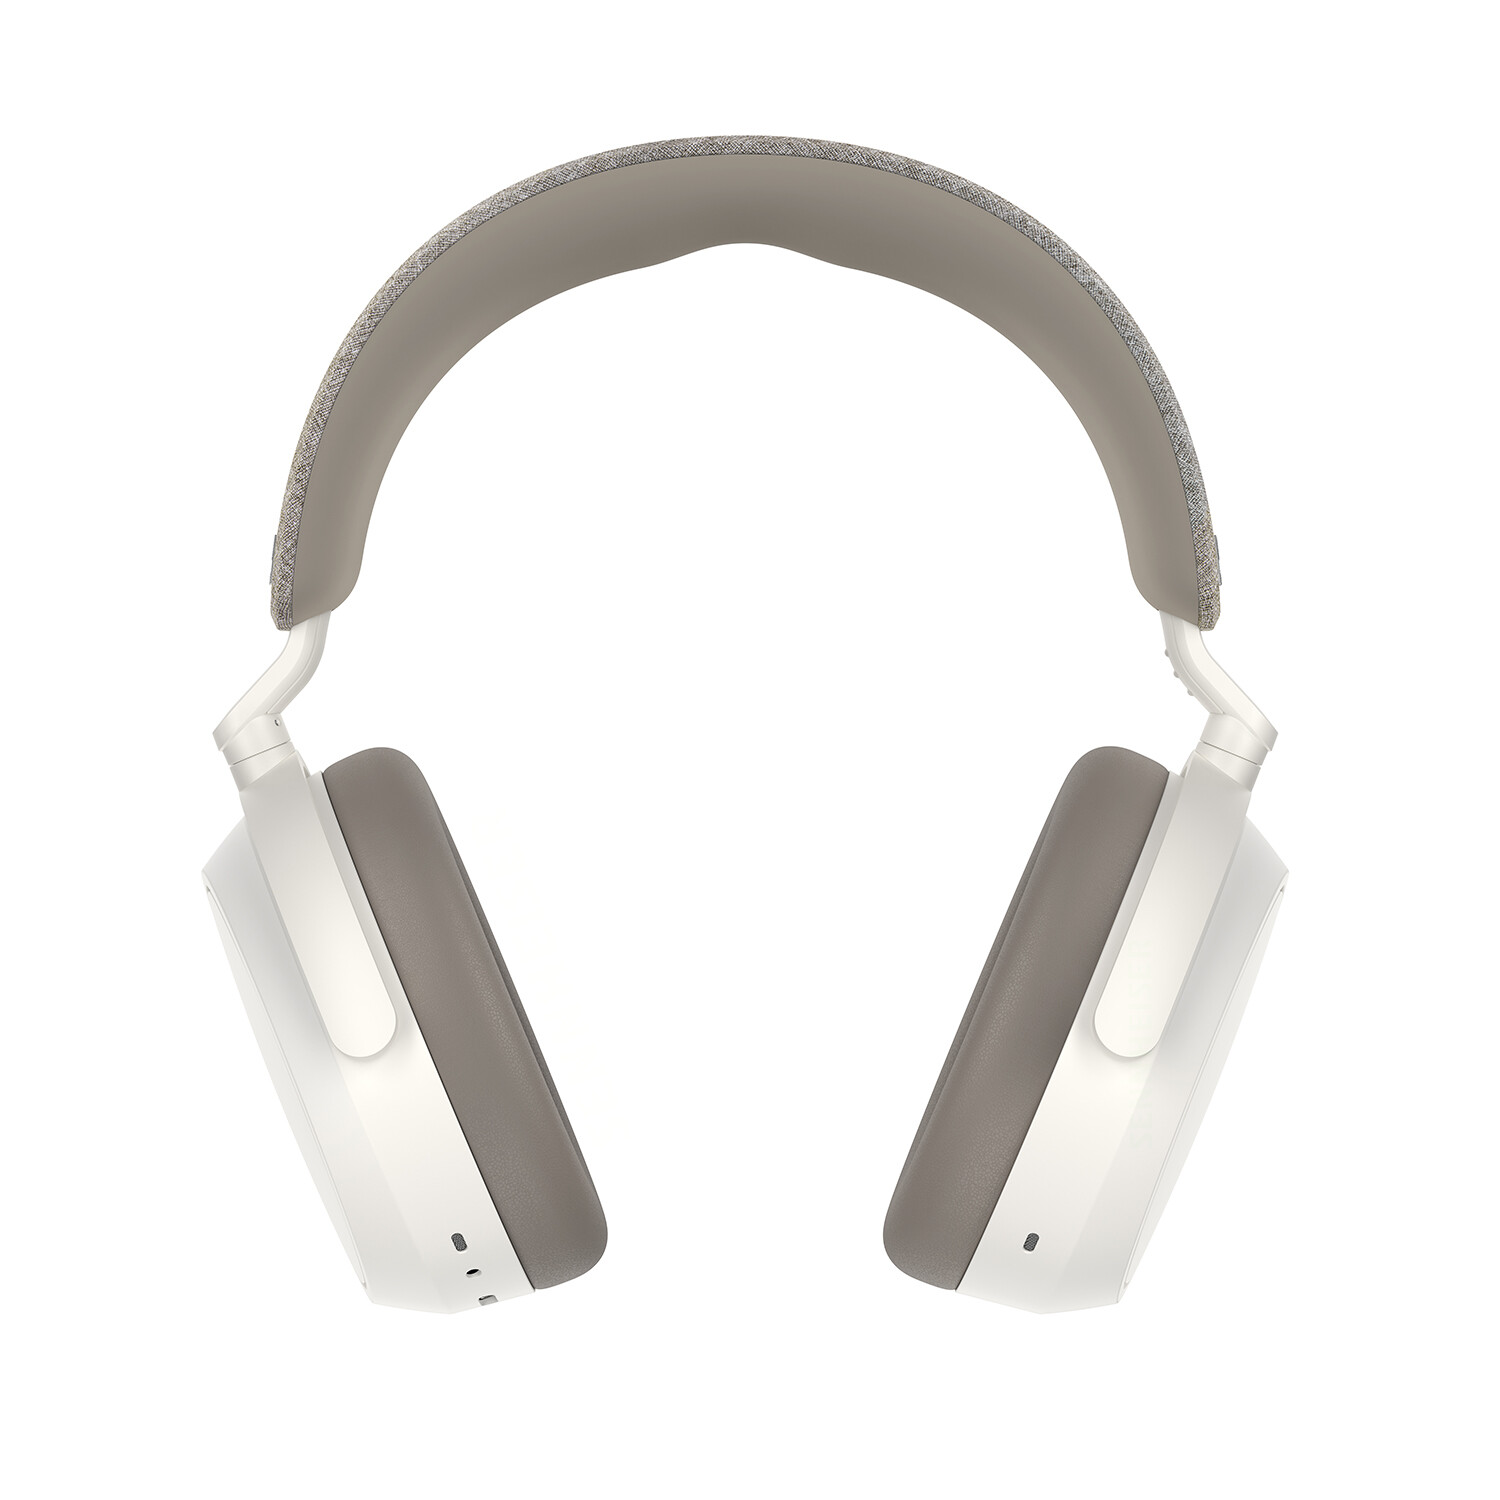 MOMENTUM 4 Wireless Headphones (Black) - Sennheiser Headphones +